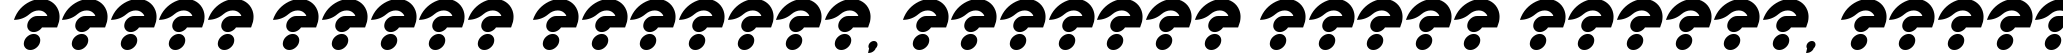 Пример написания шрифтом KIOSHIMA Bold Italic текста на белорусском